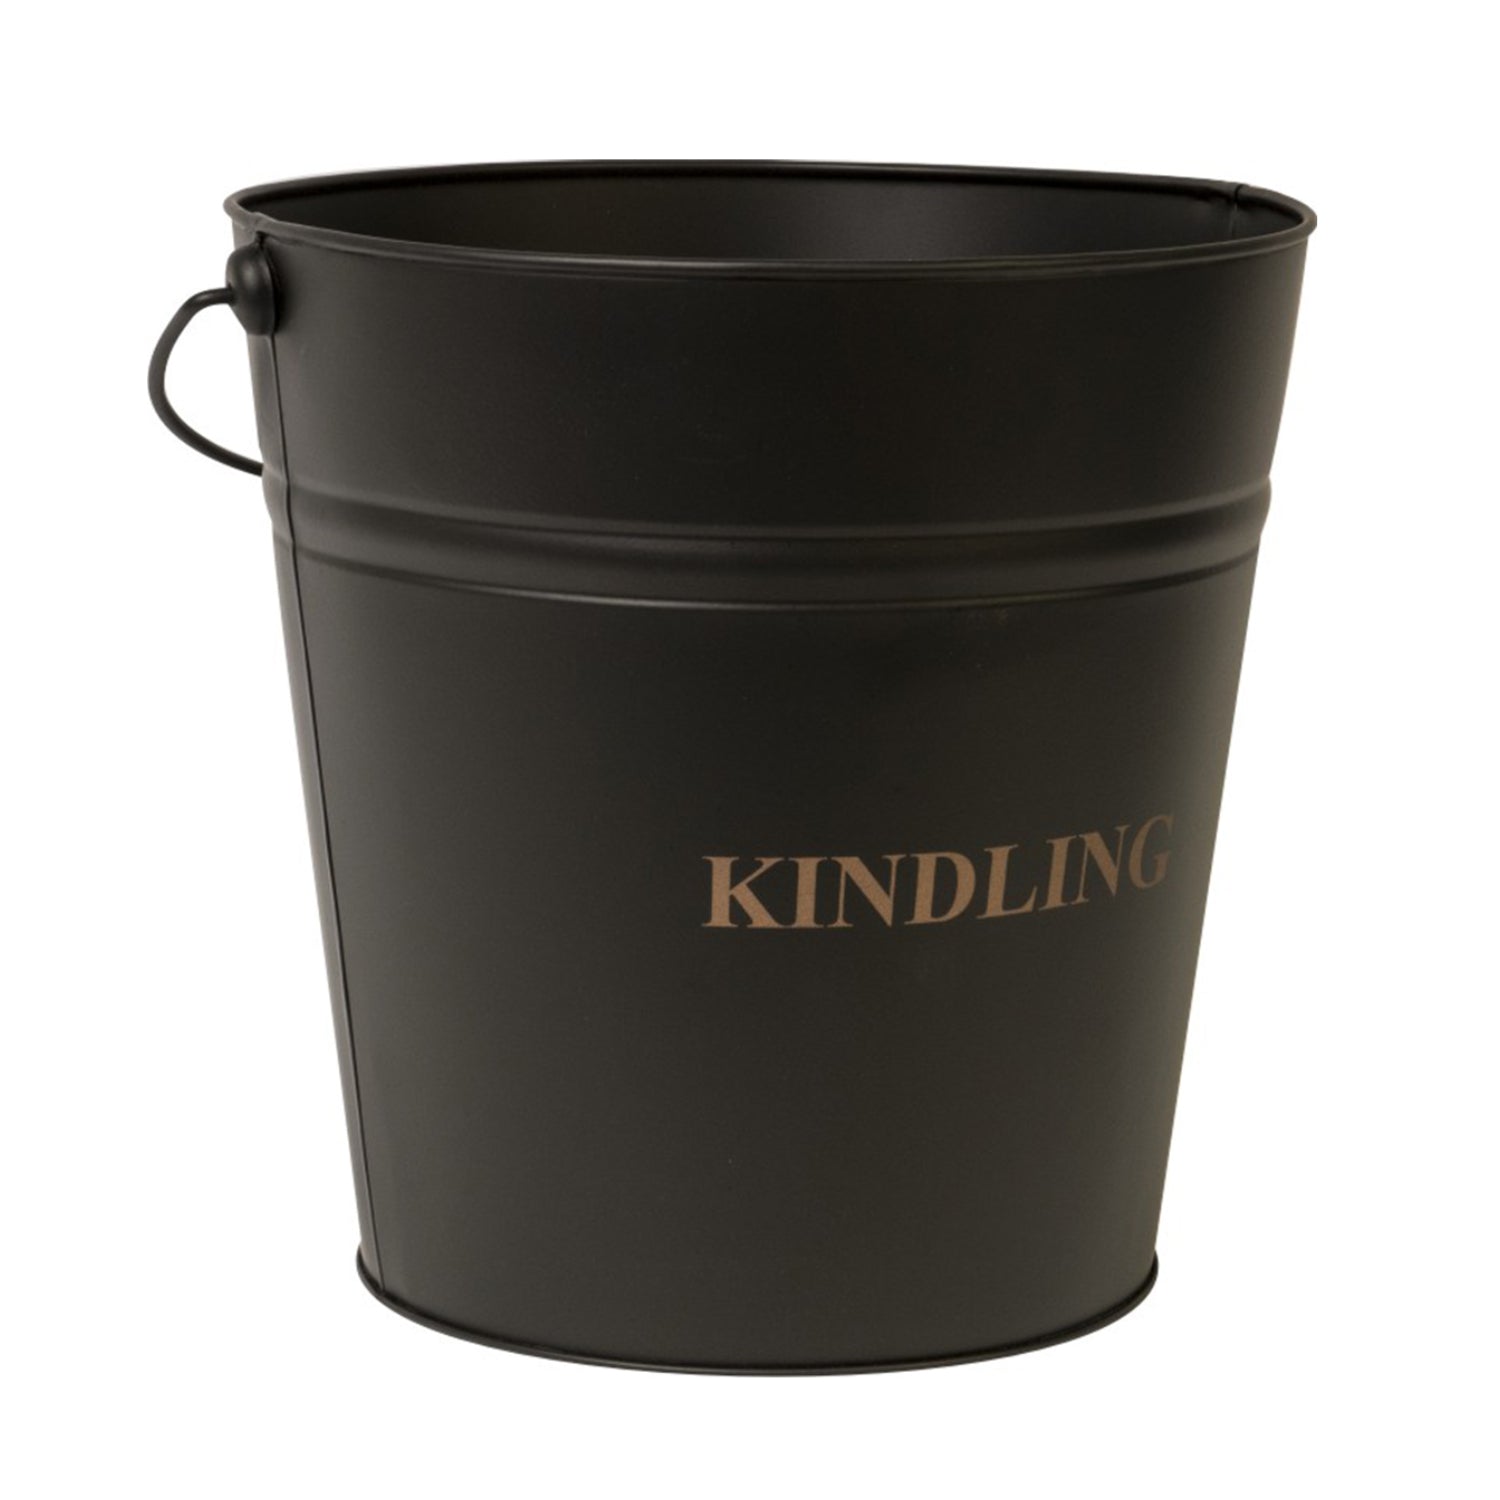 Kindling Black Bucket by Ivyline